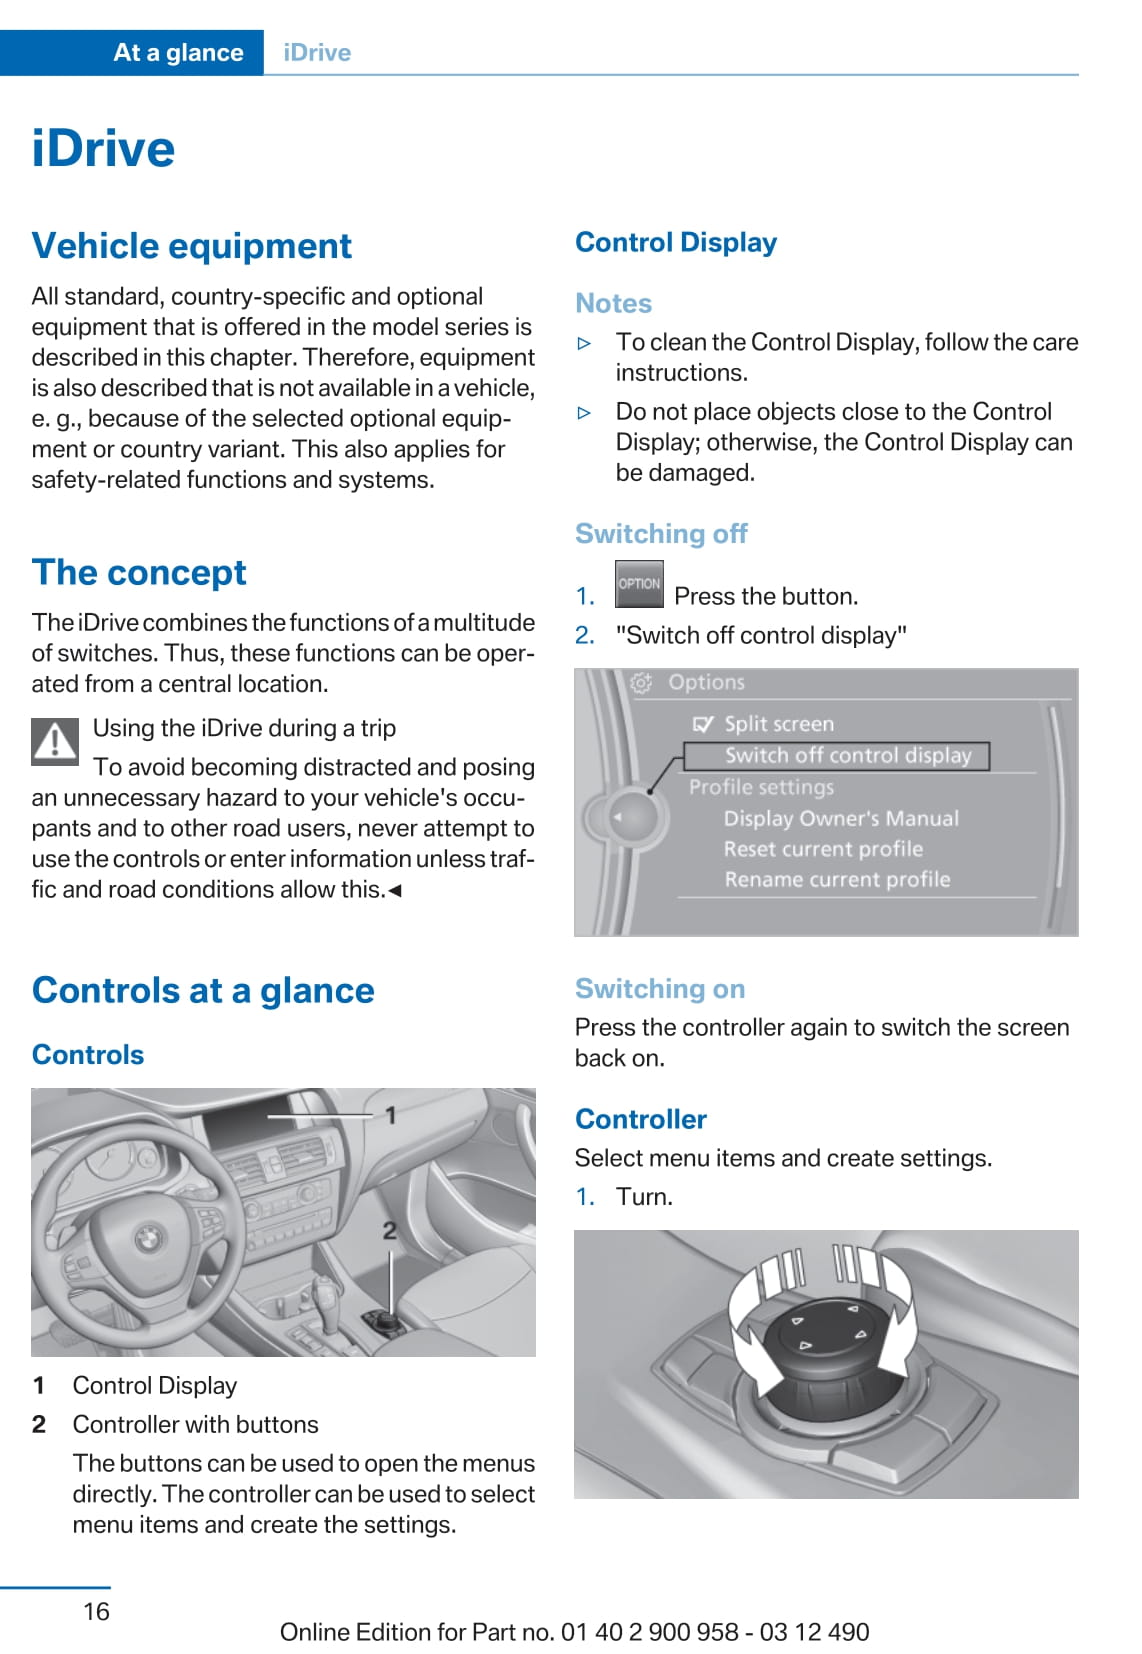 2012 BMW X3 Owner's Manual | English